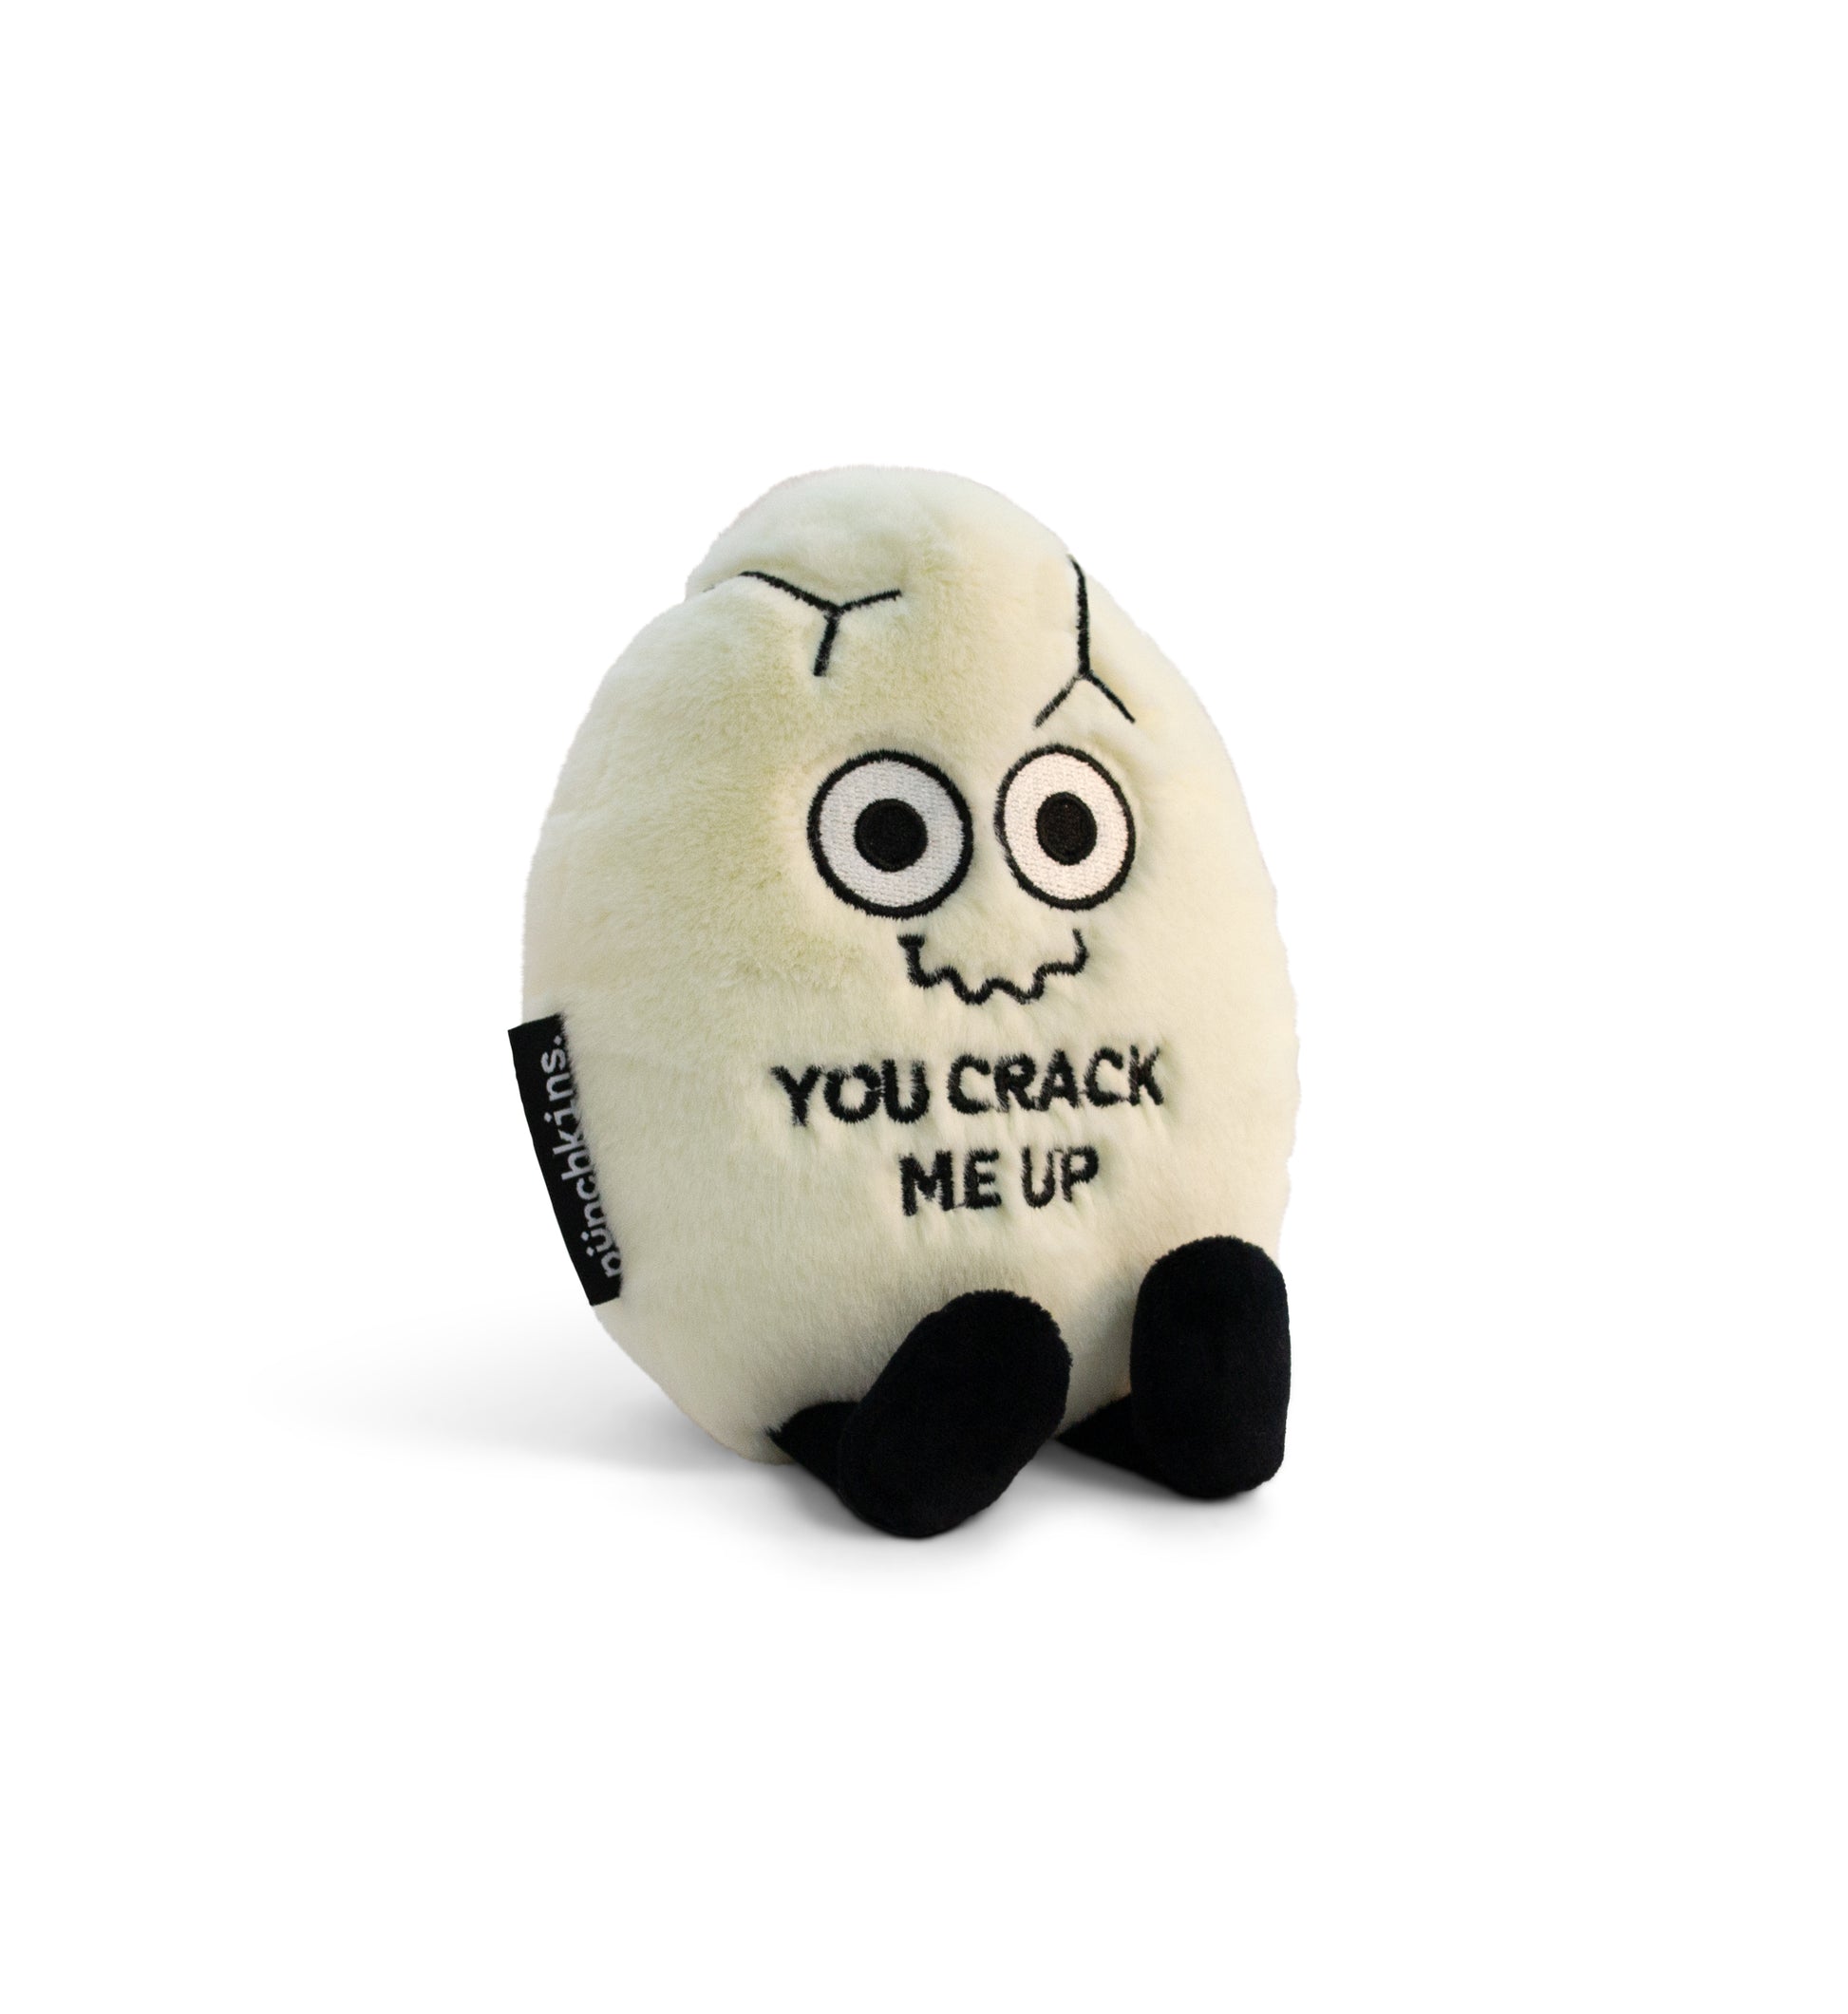 "You Crack Me Up" Egg Plush